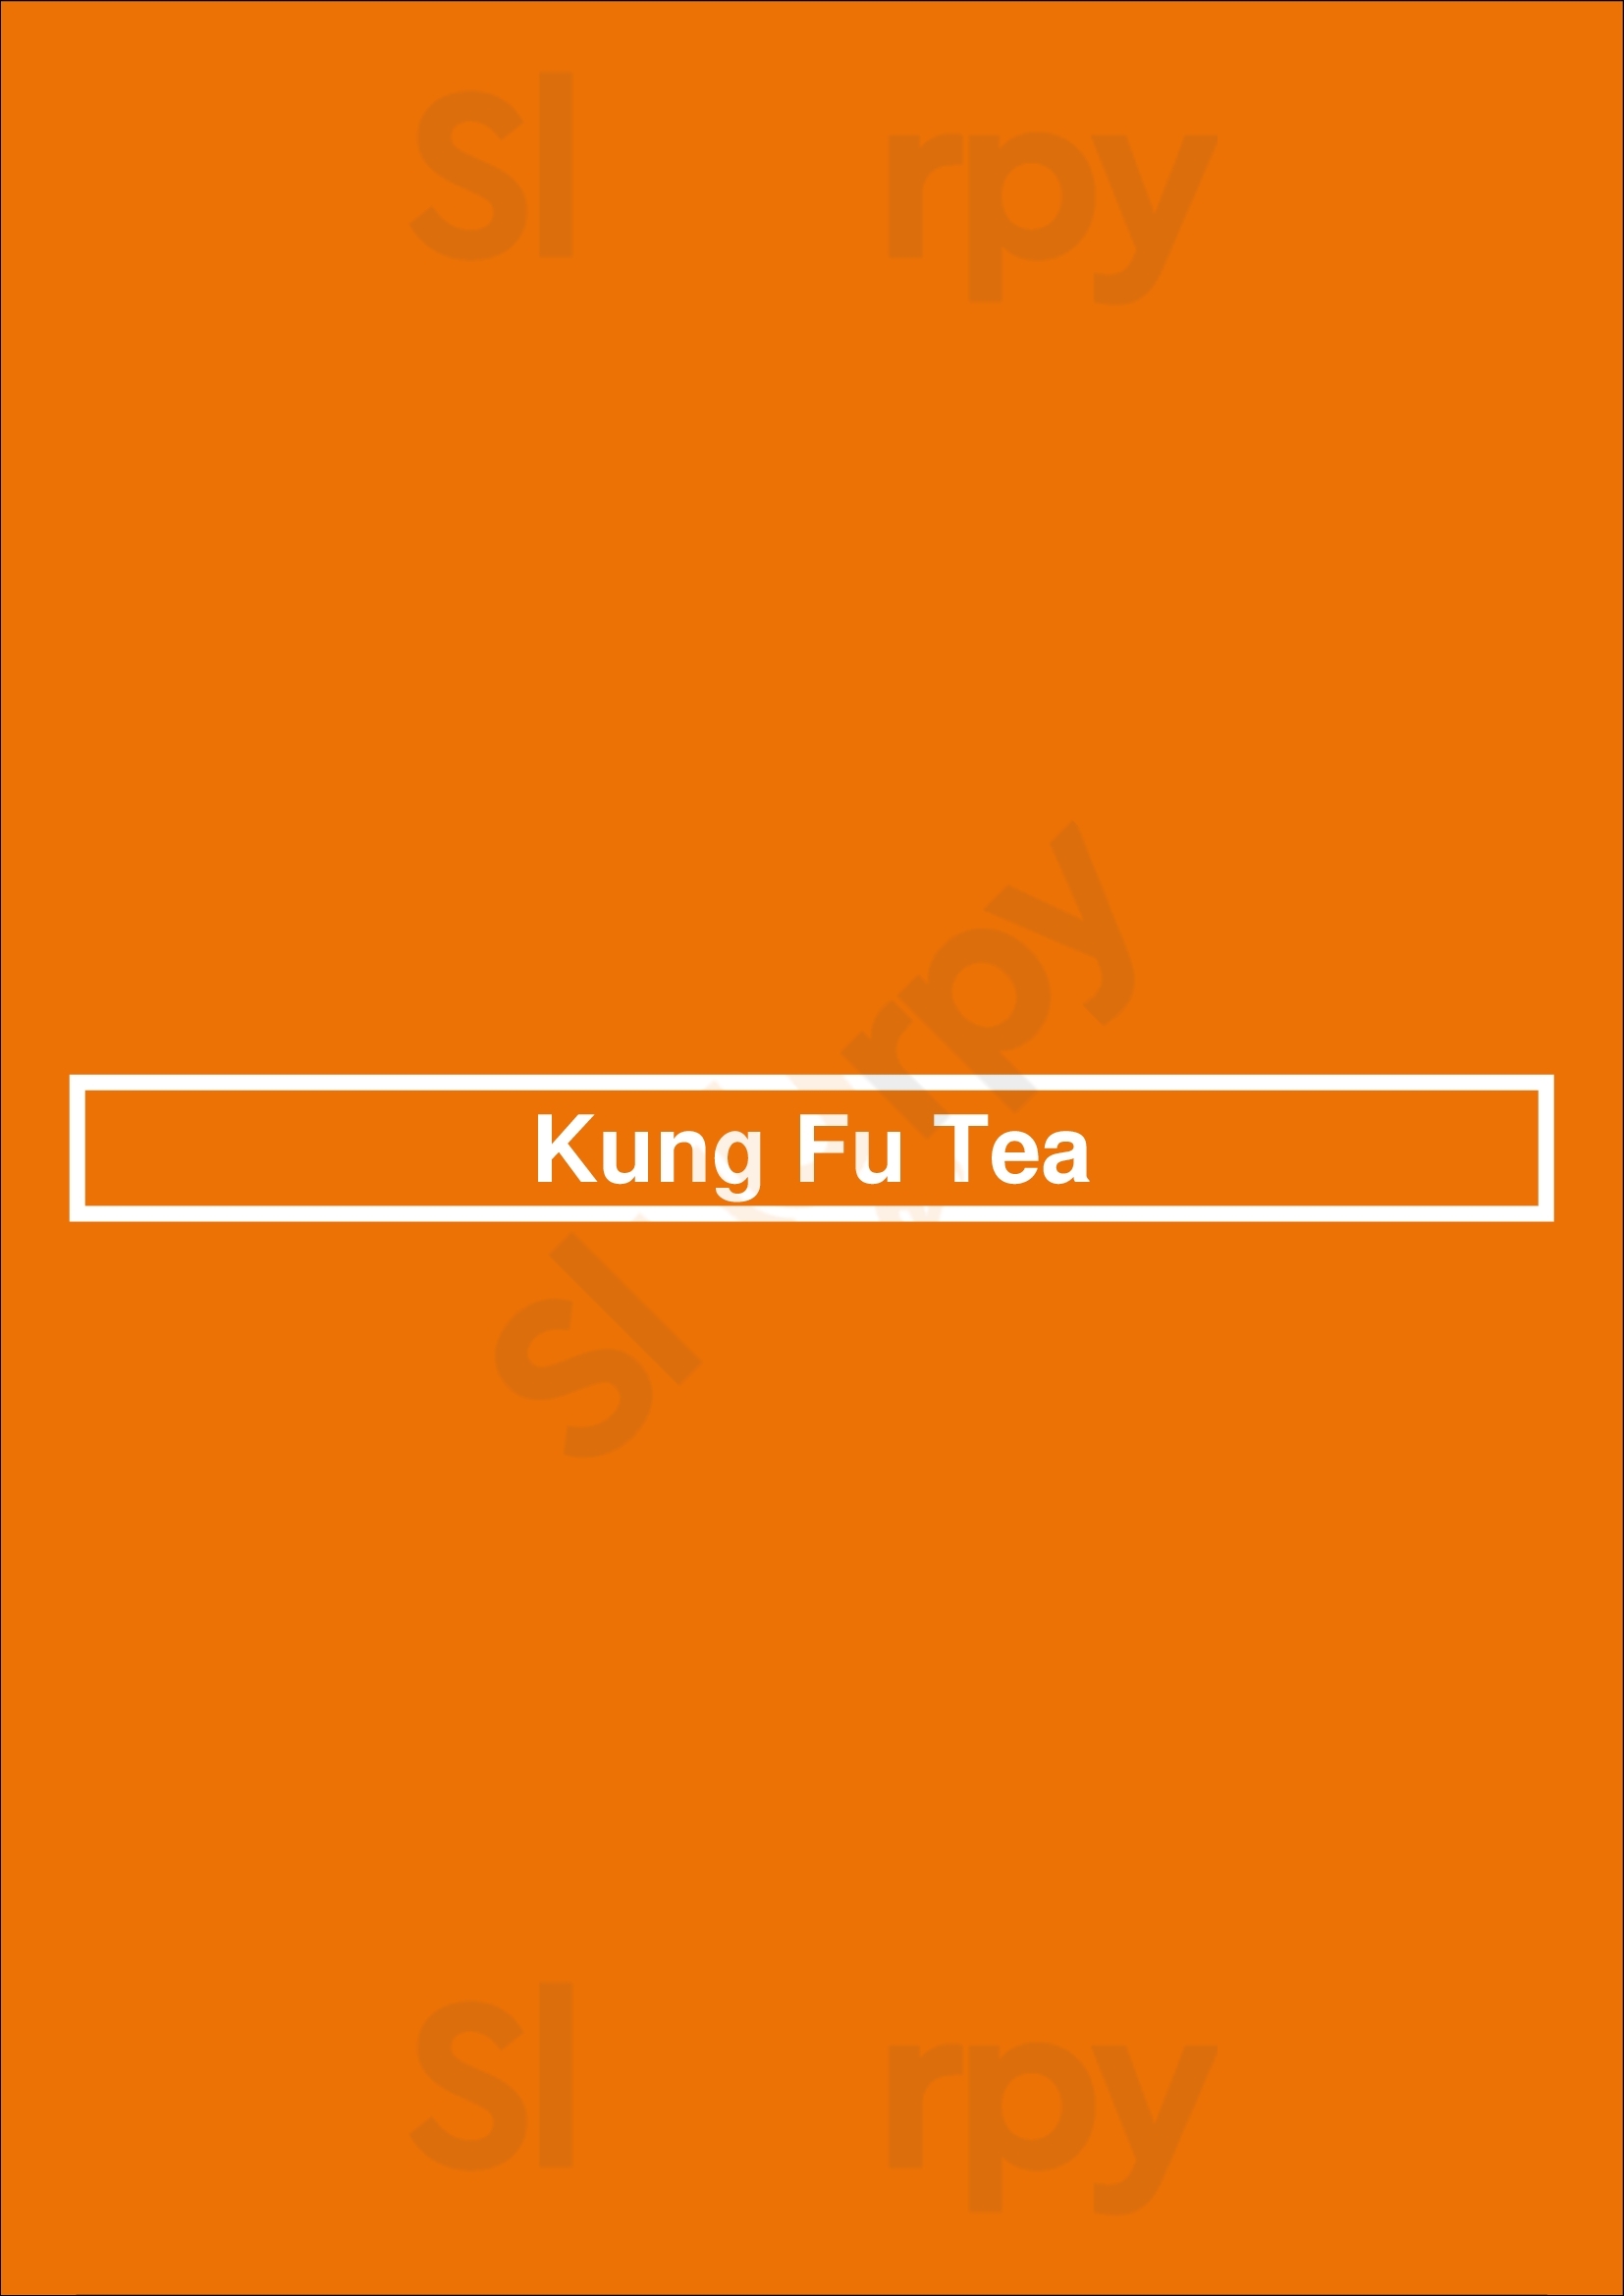 Kung Fu Tea Tukwila Menu - 1